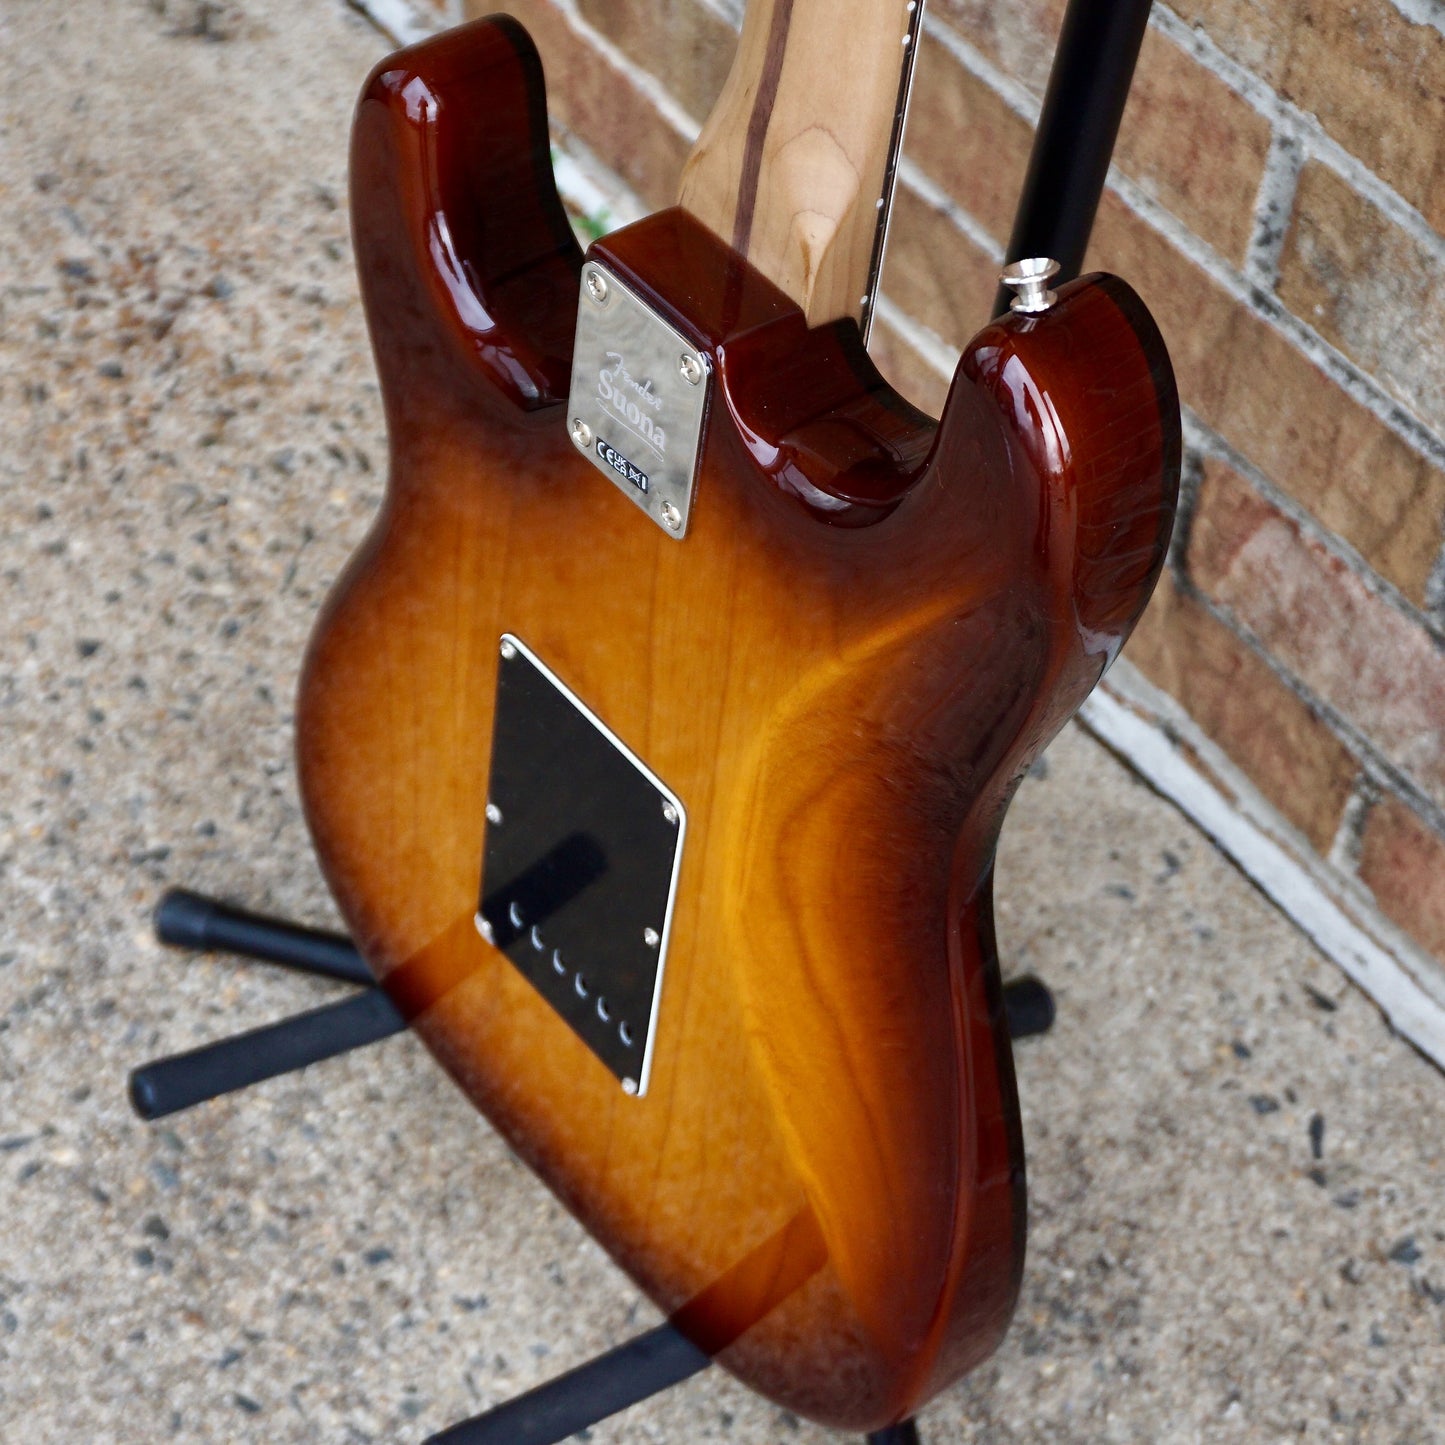 Fender Limited Edition Suona Stratocaster Thinline Ebony Fingerboard Violin Burst